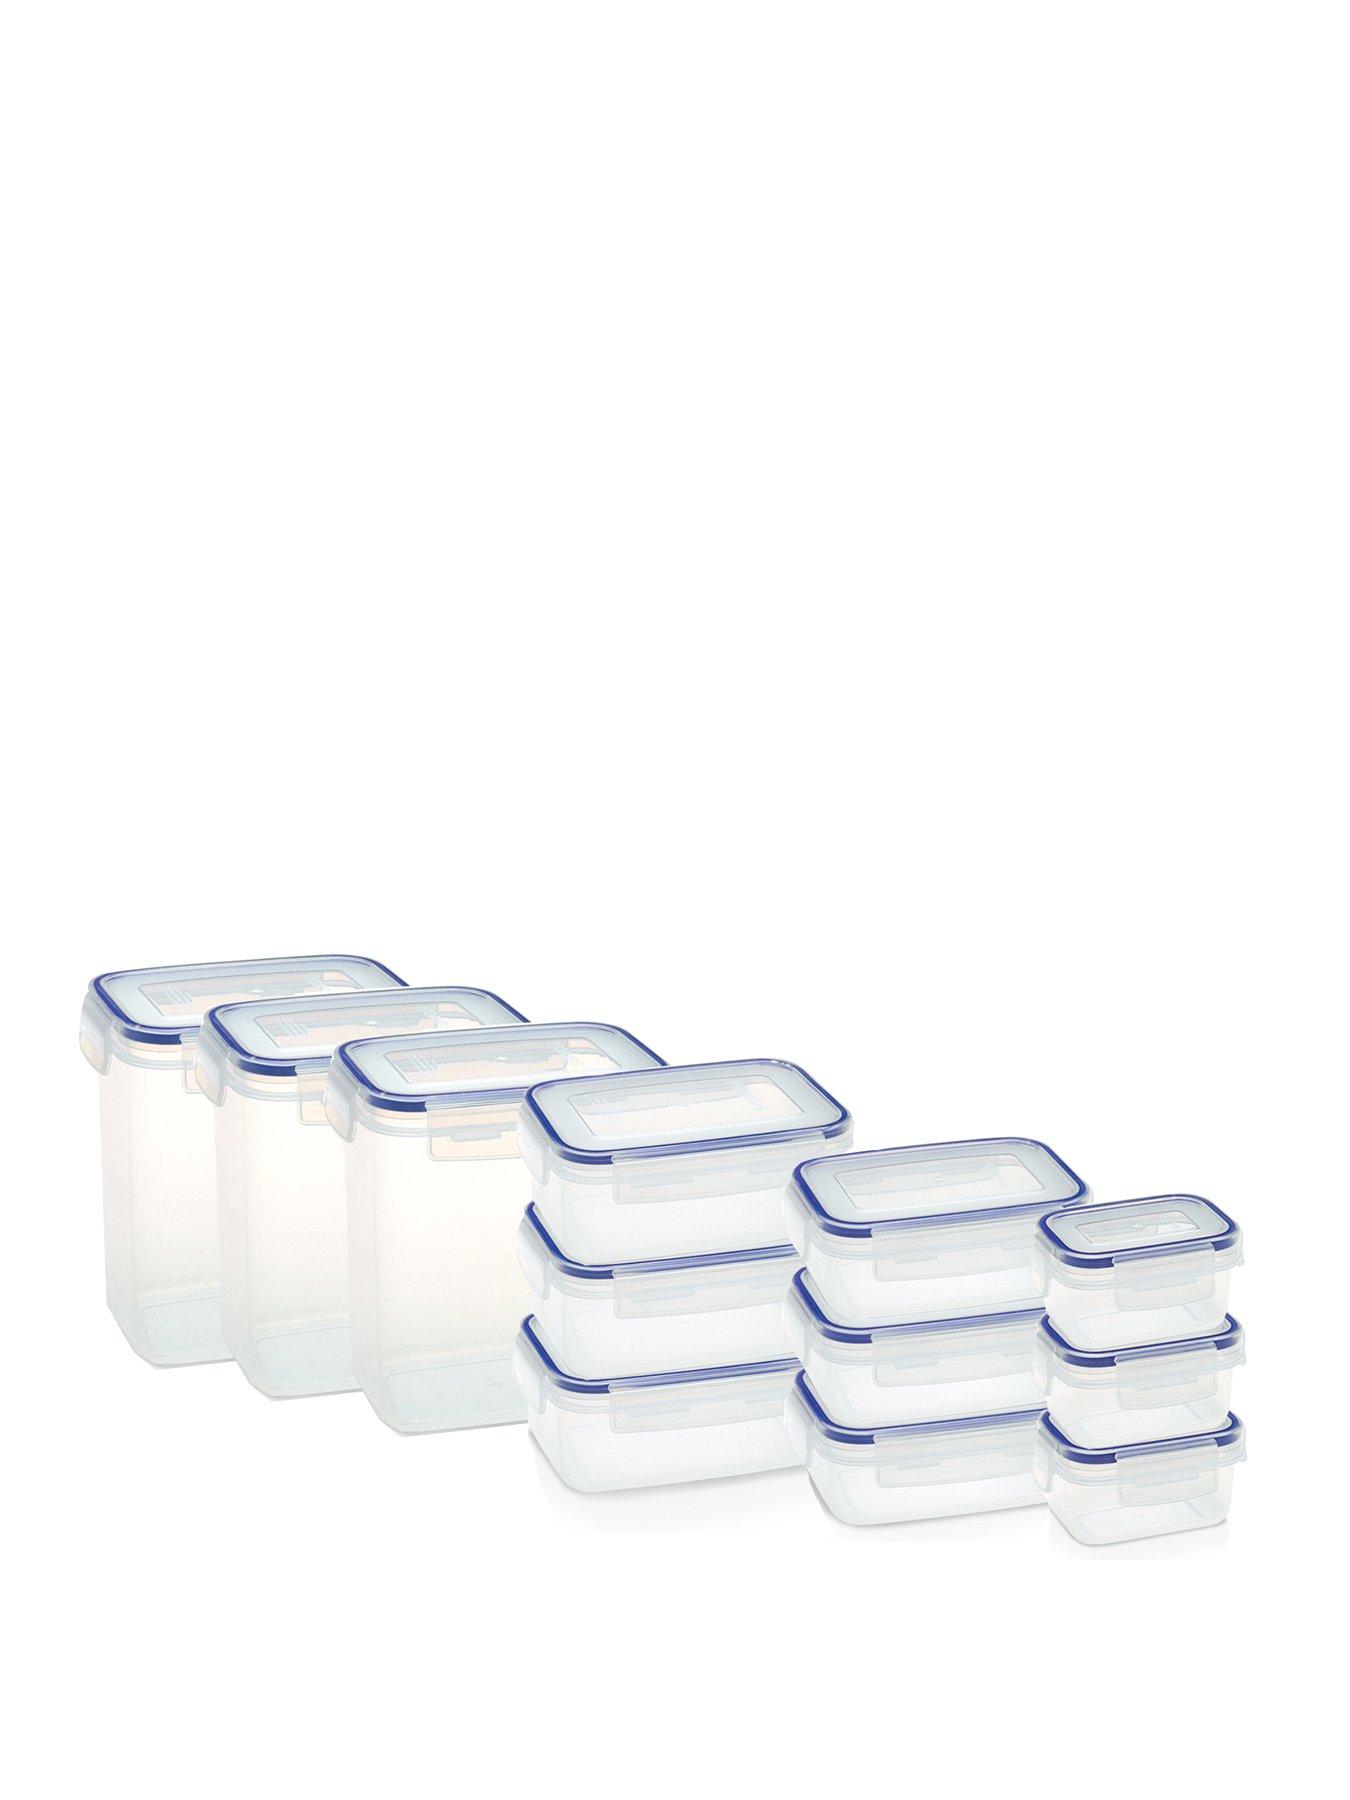 Addis Premium Tidy Drawer Soft Base Storage Boxes White Grey Set of 3 